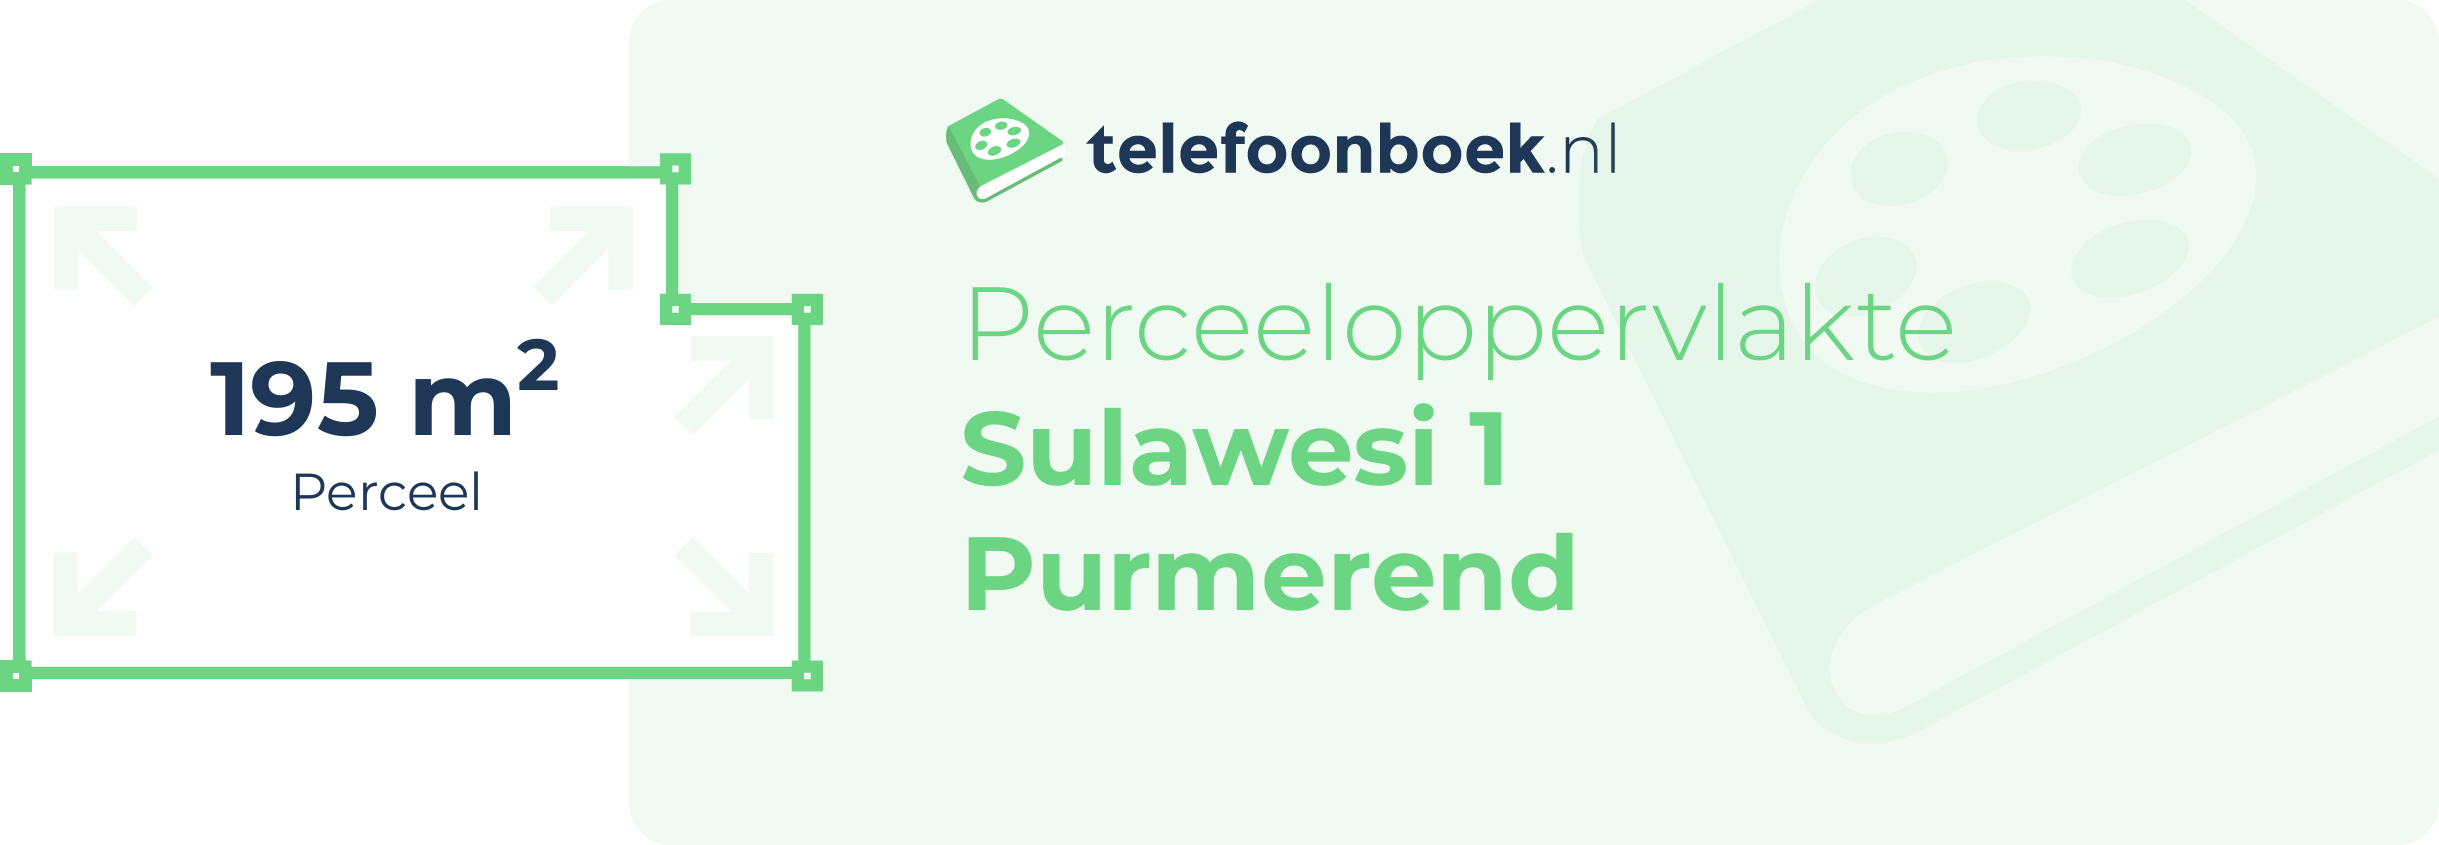 Perceeloppervlakte Sulawesi 1 Purmerend